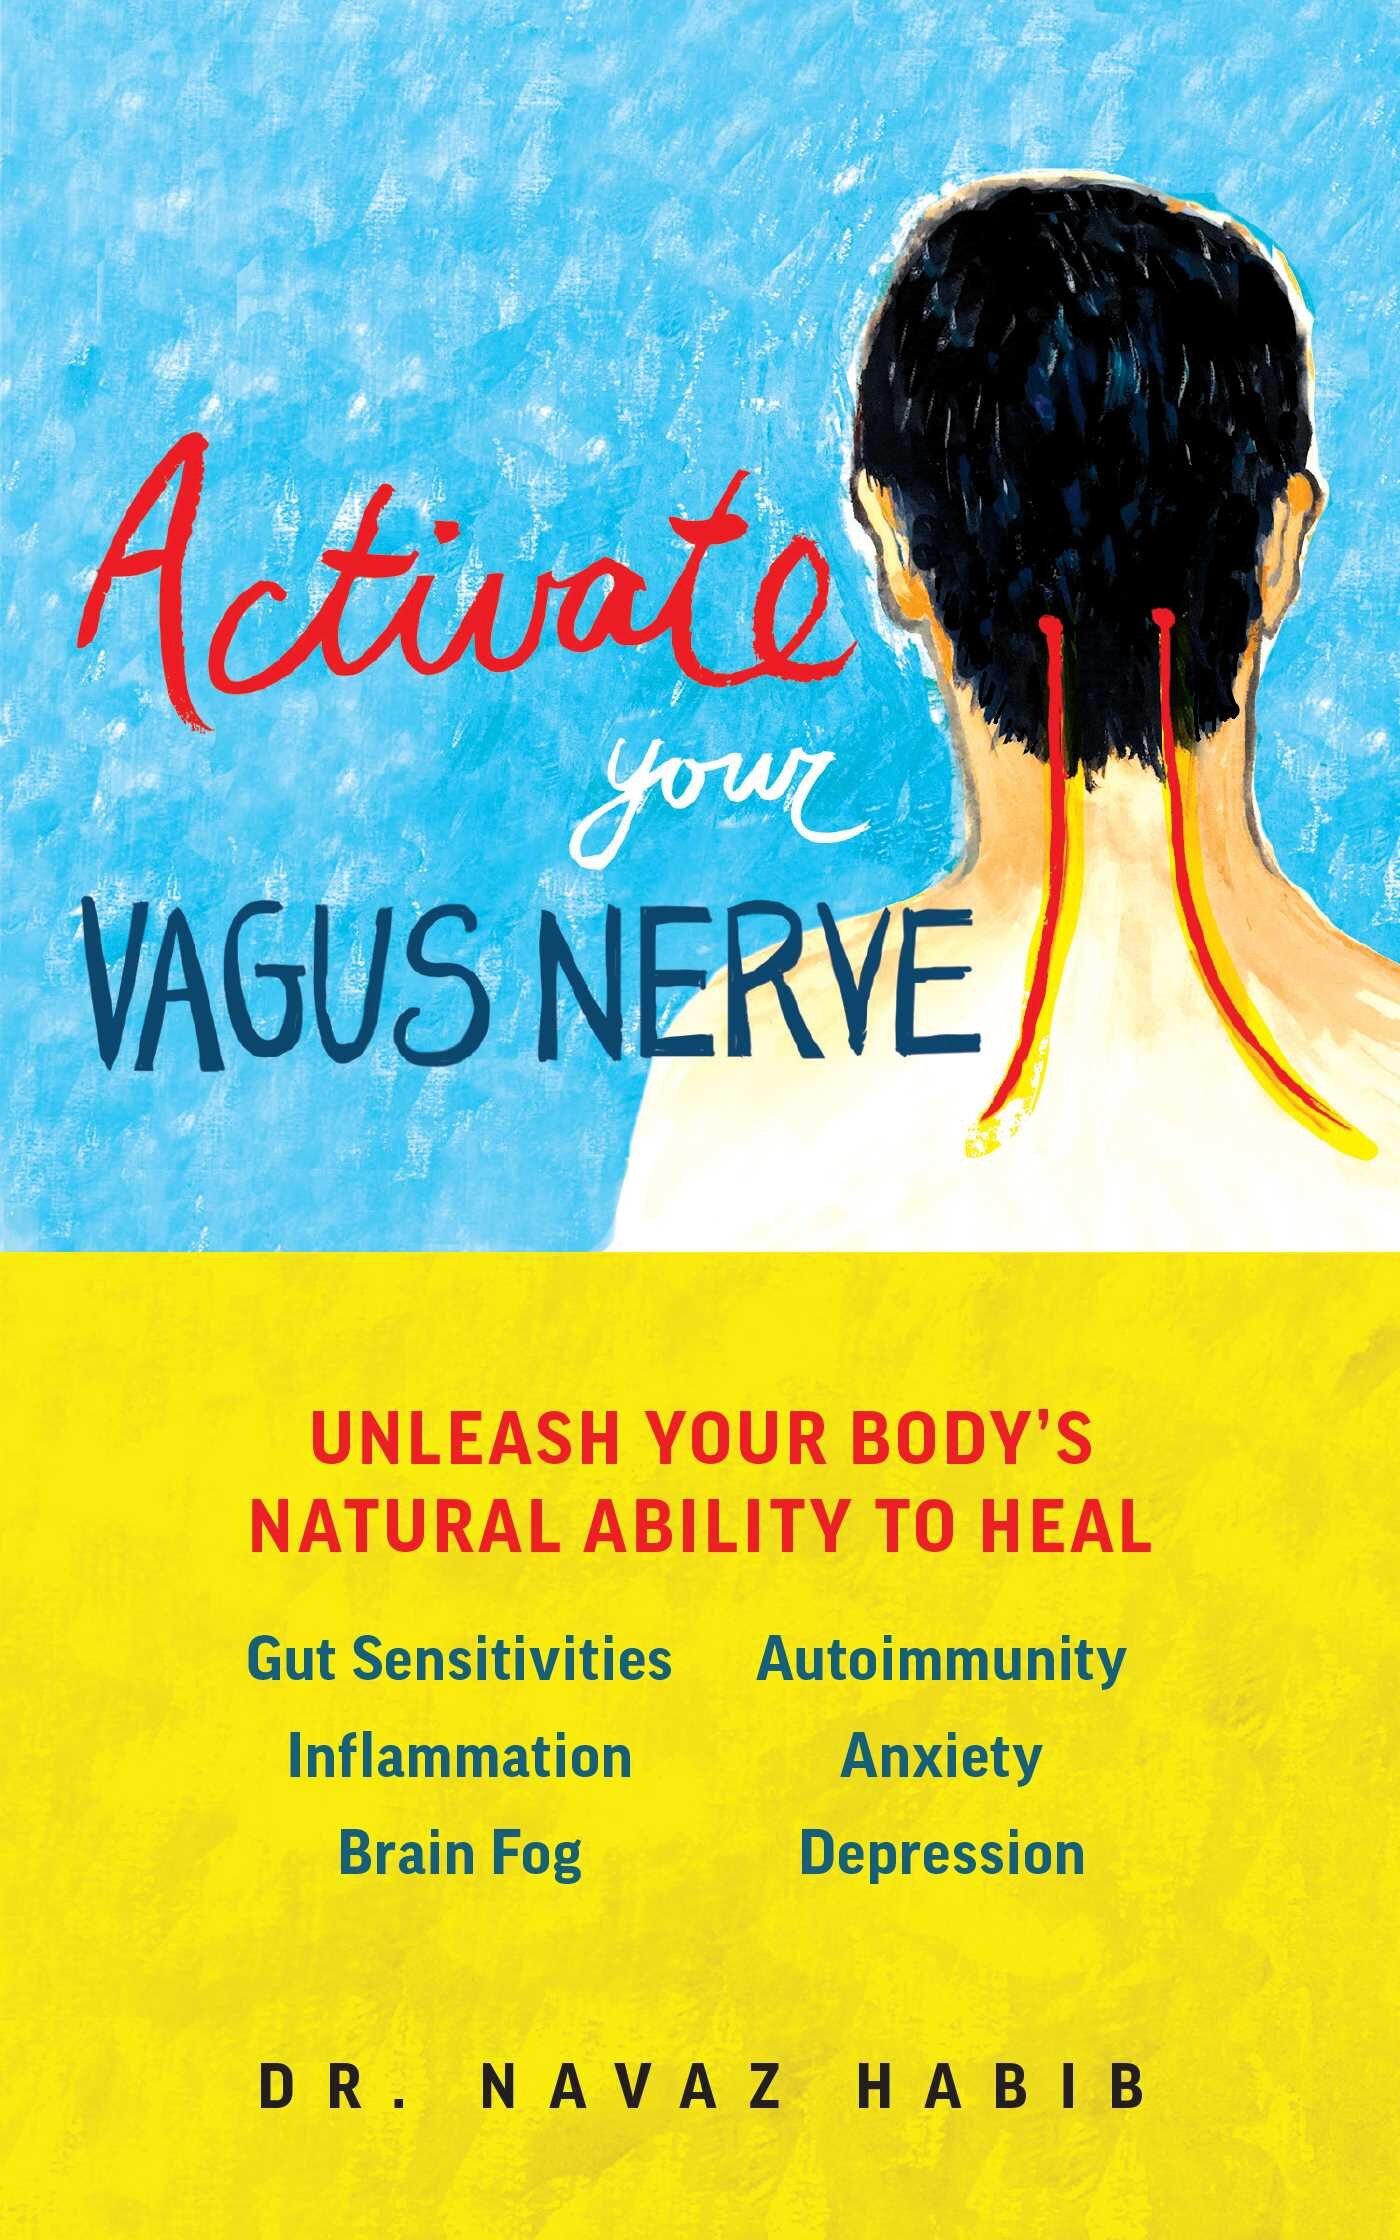 activate-your-vagus-nerve-9781612438740_hr.jpg